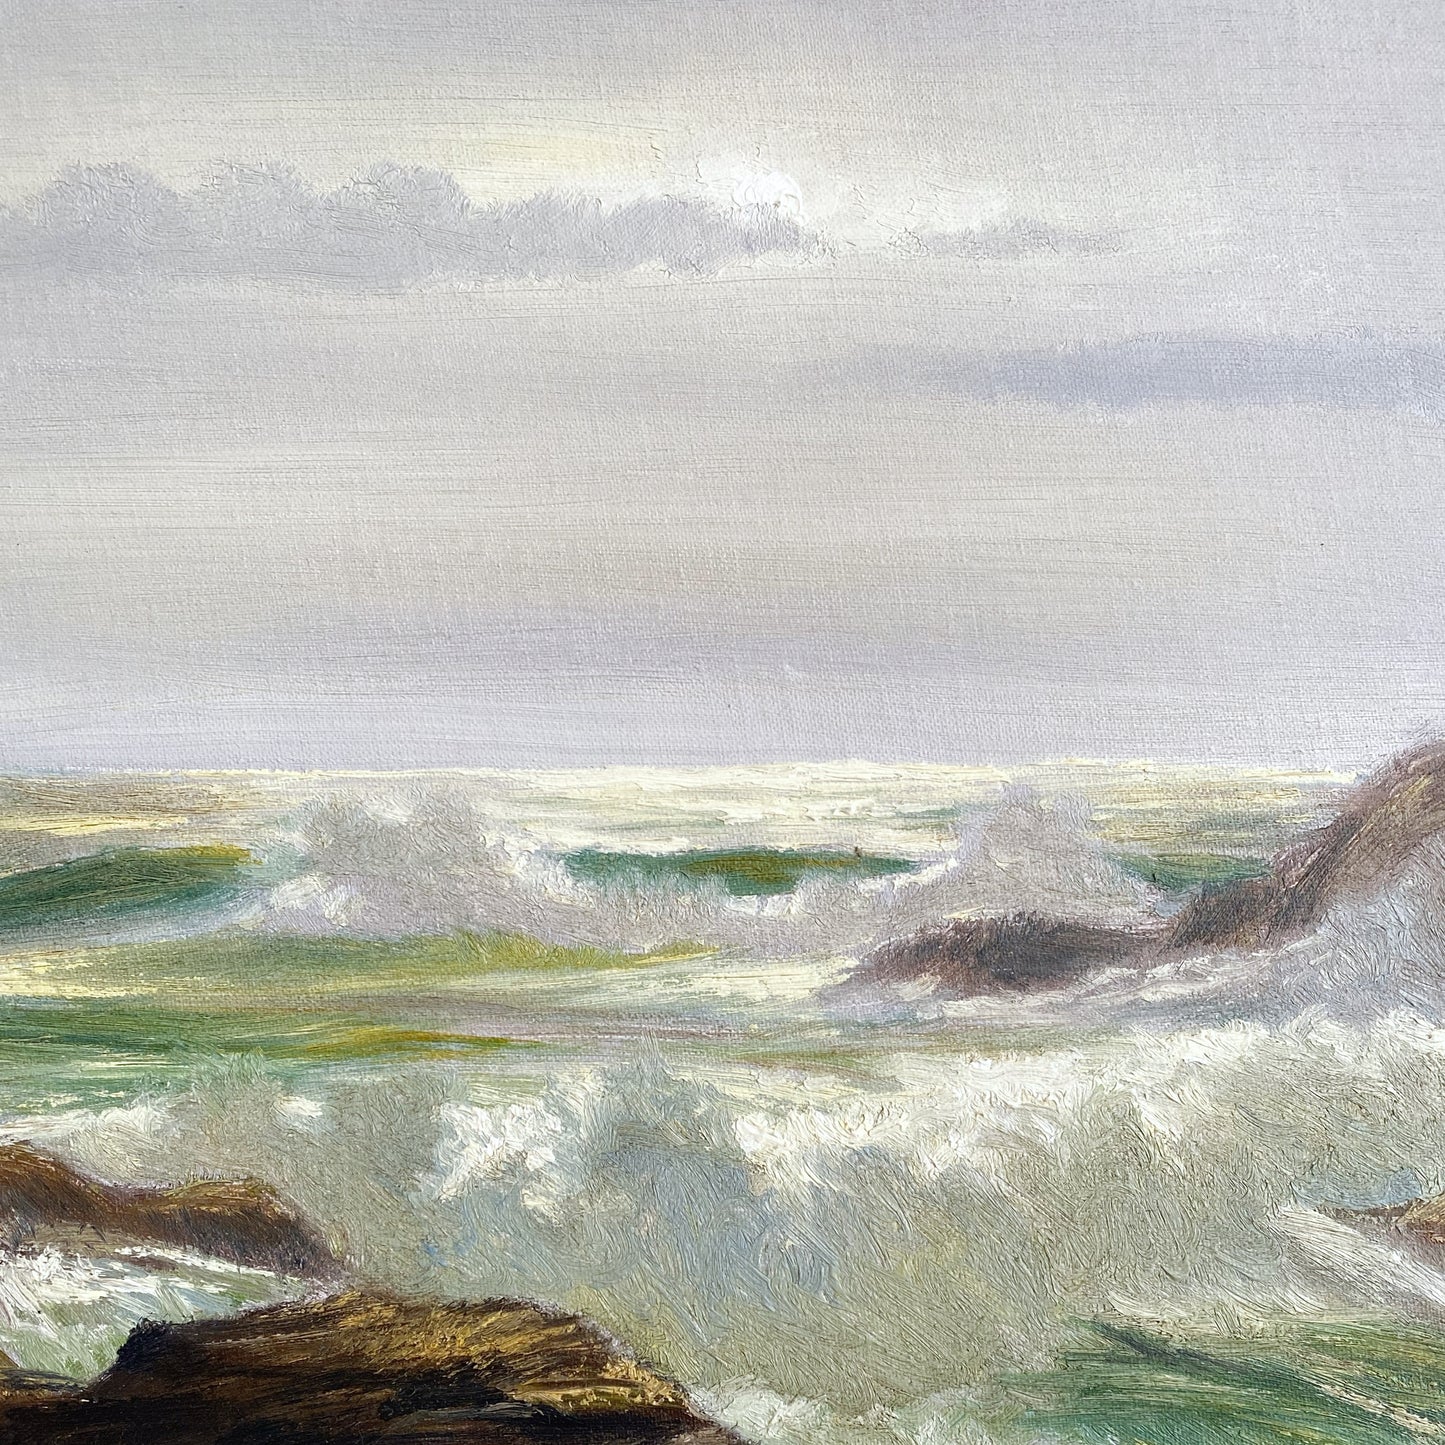 Large Original Seascape Painting by Ronald Davies (24 x 28)